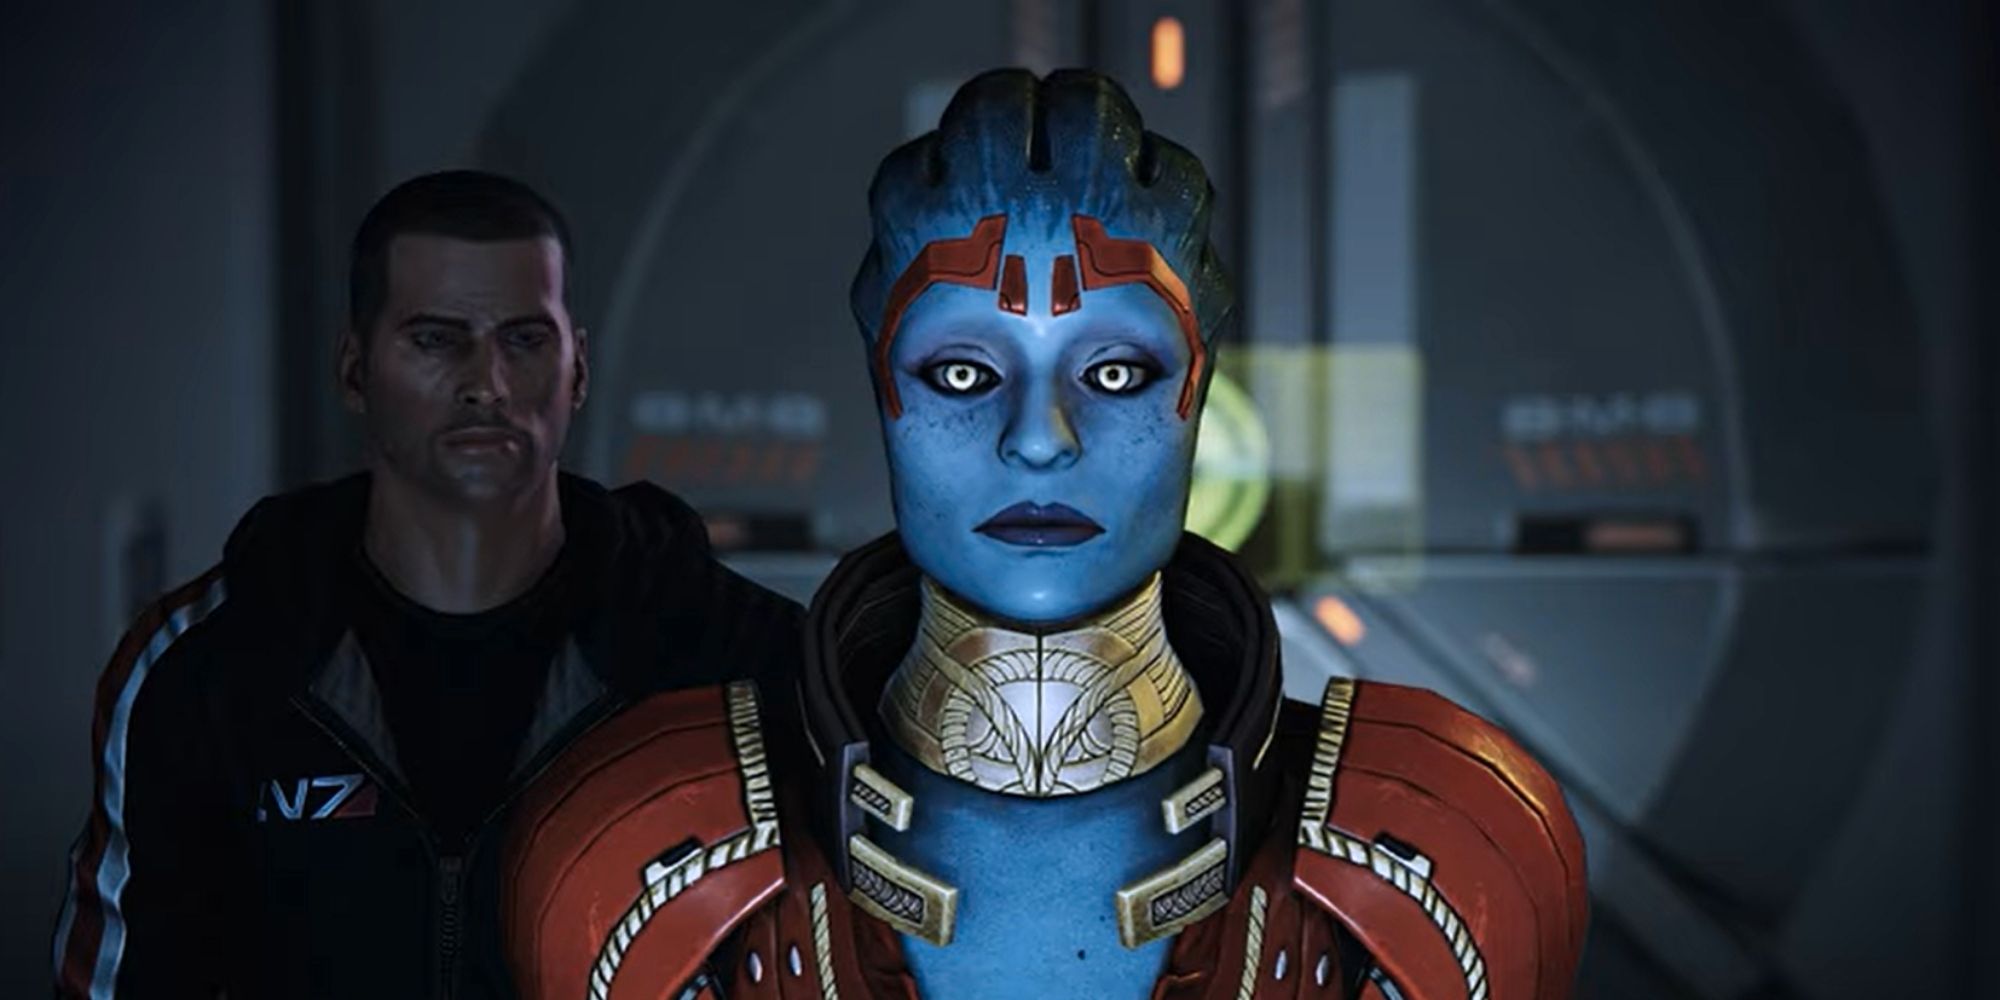 ʻO Mass Effect 2 Shepard e kamaʻilio me Samara